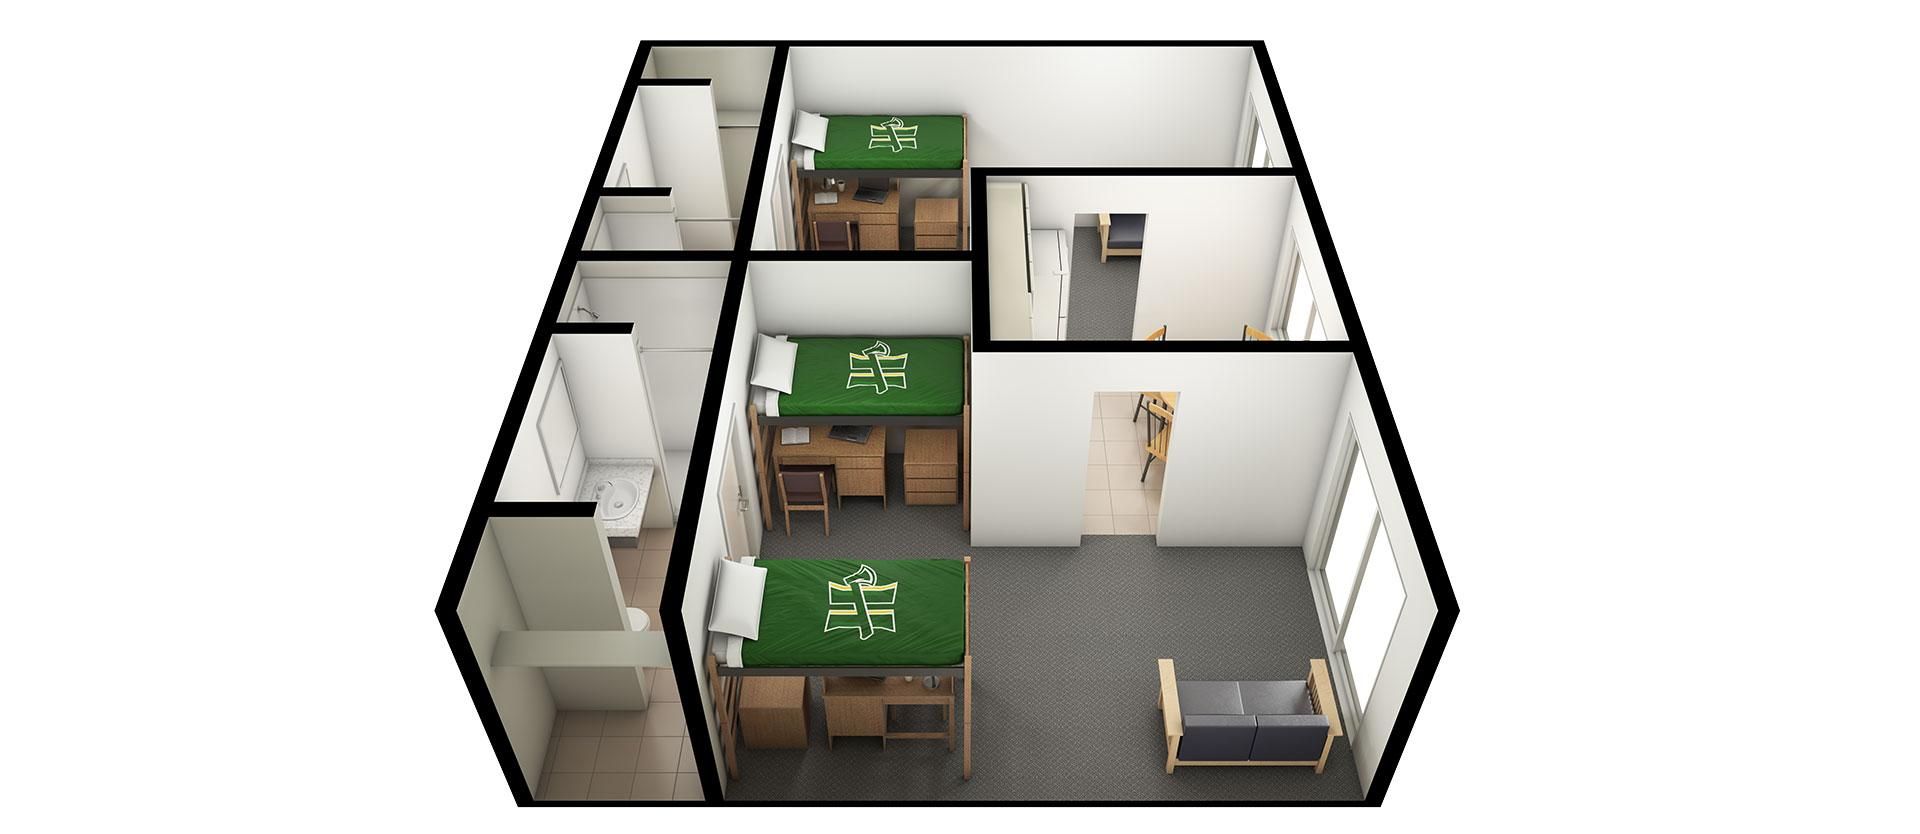 Campus Apartments Floor Plan